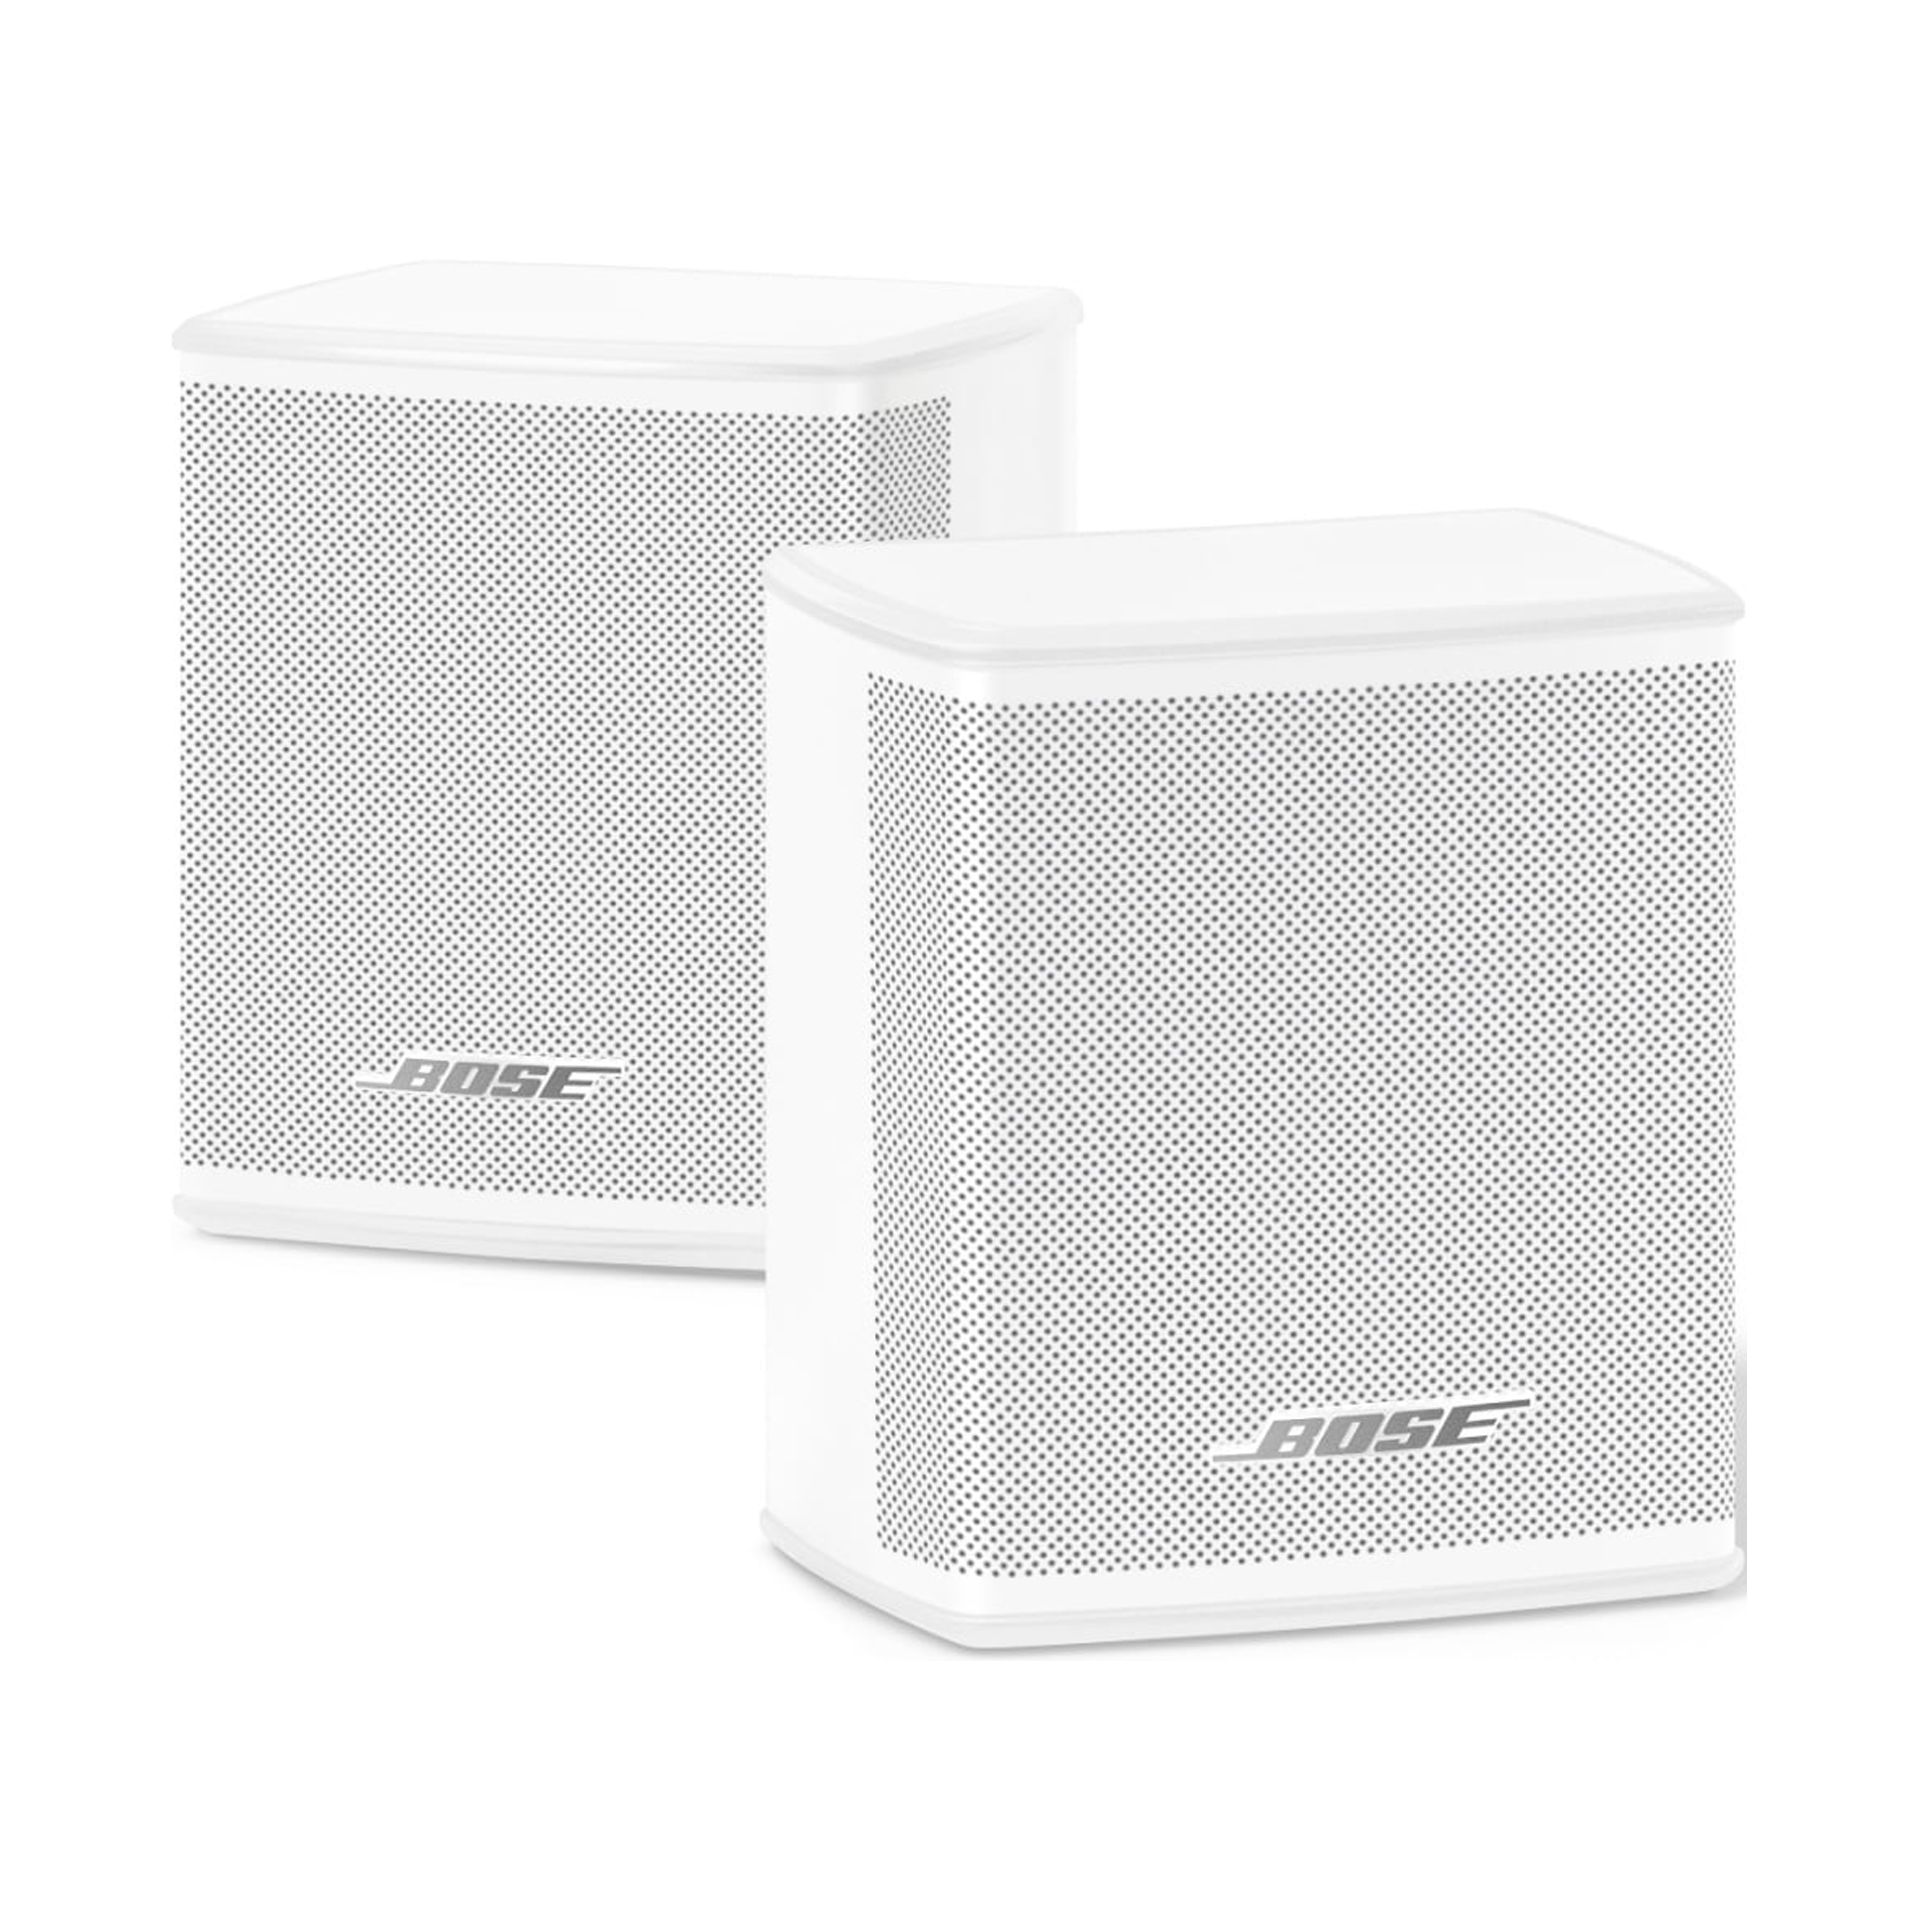 Bose Surround Sound Rear Speakers for Bose Soundbars, White - image 5 of 5